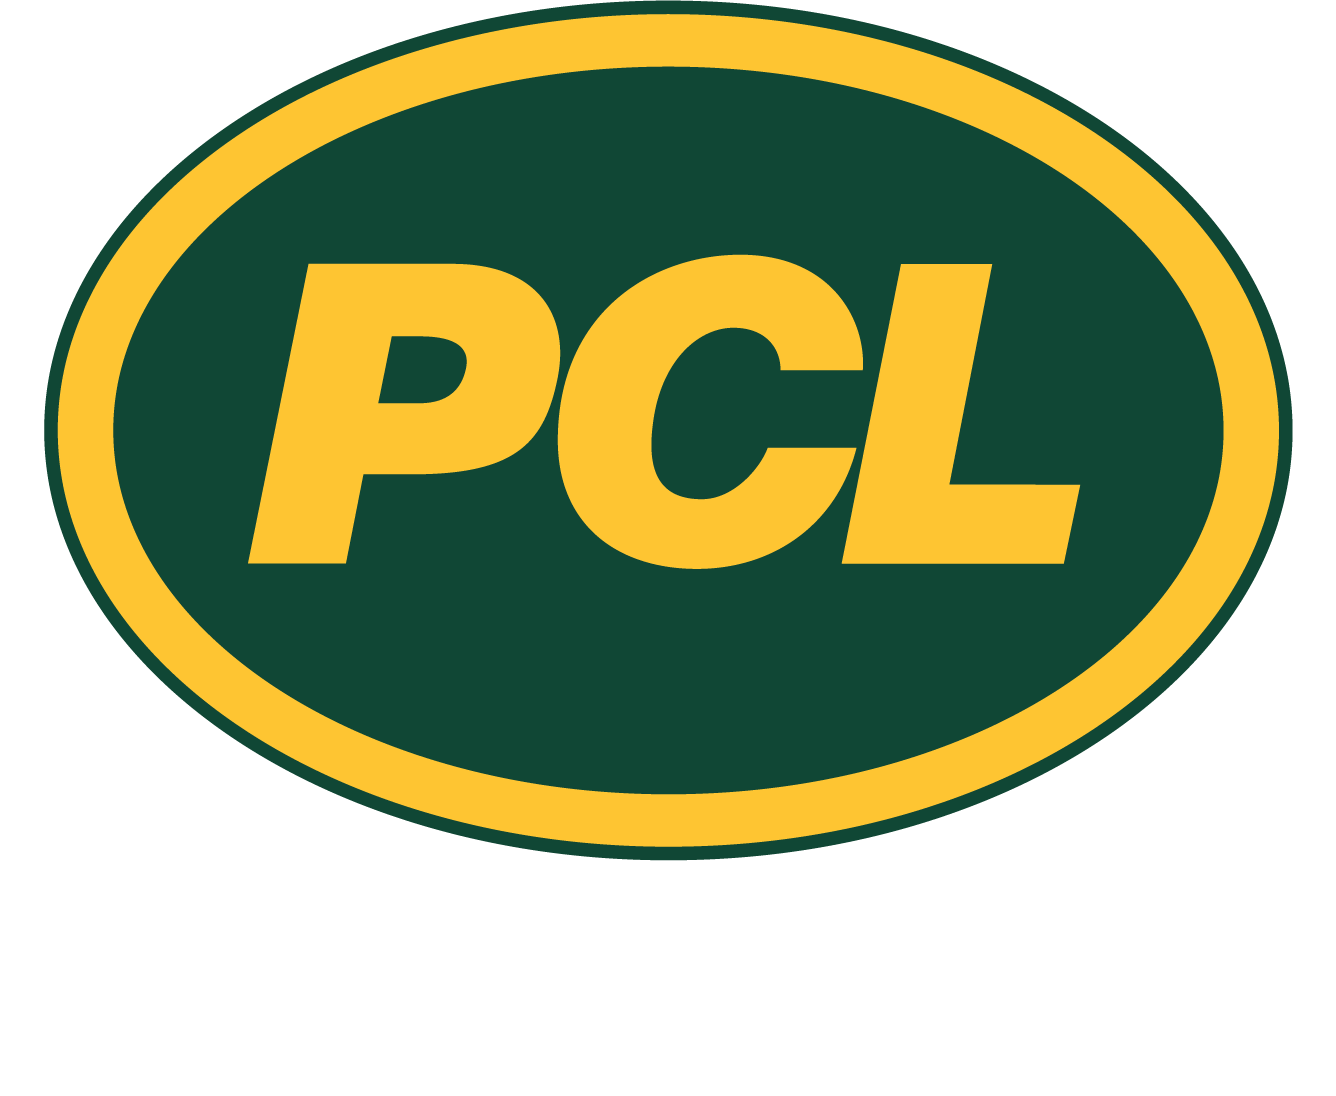 PCL Construction logo